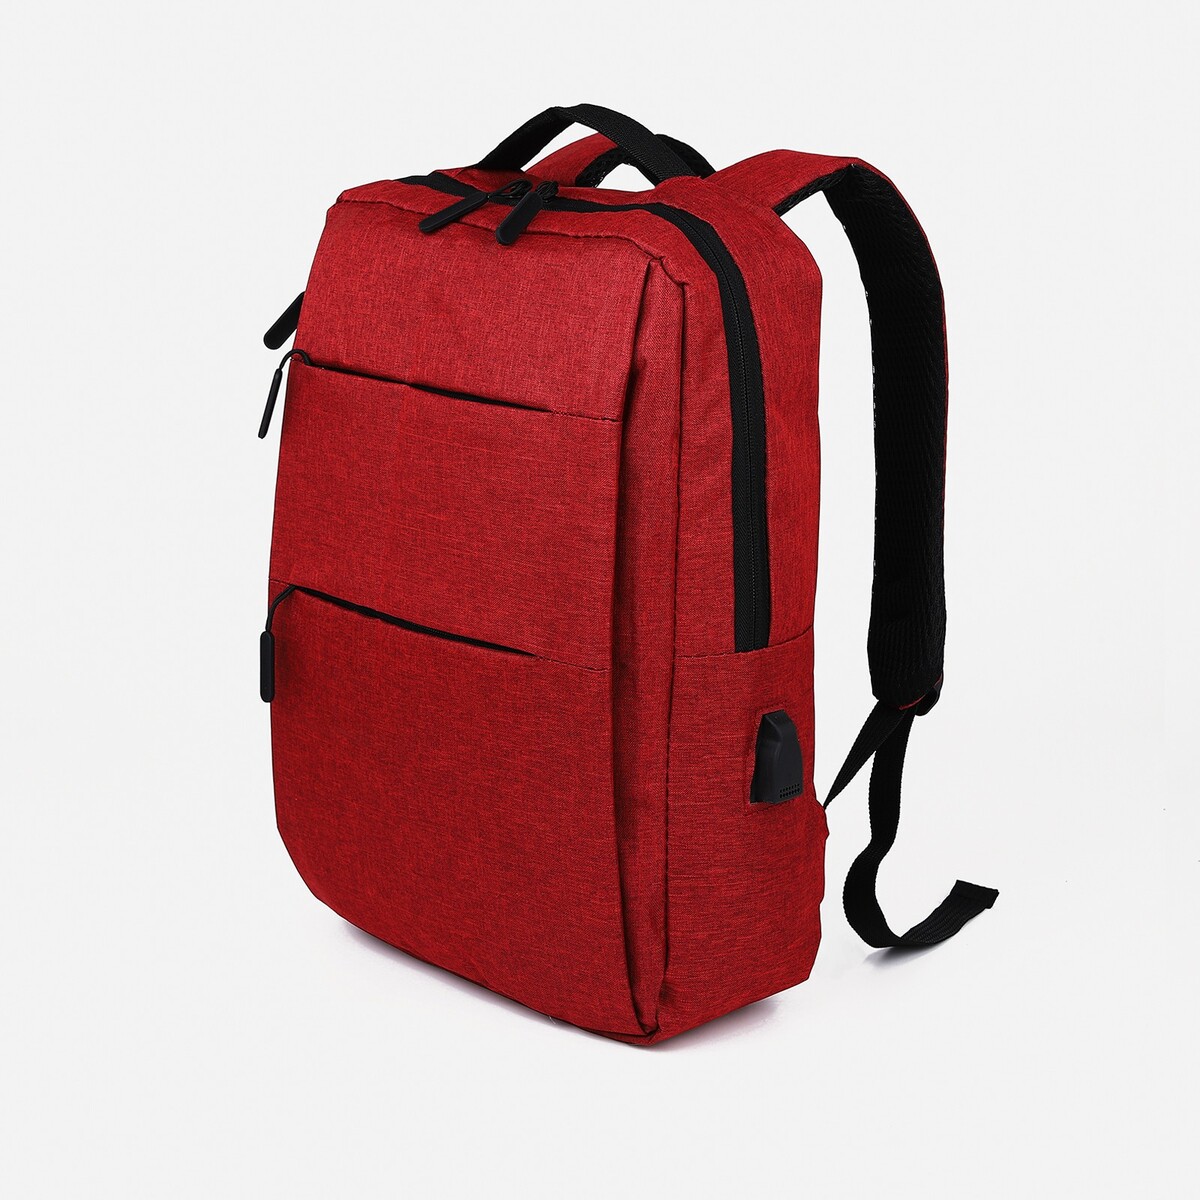 Рюкзак мужской на молнии, 4 наружных кармана, с usb, цвет бордовый рюкзак мужской на молнии 4 наружных кармана красный